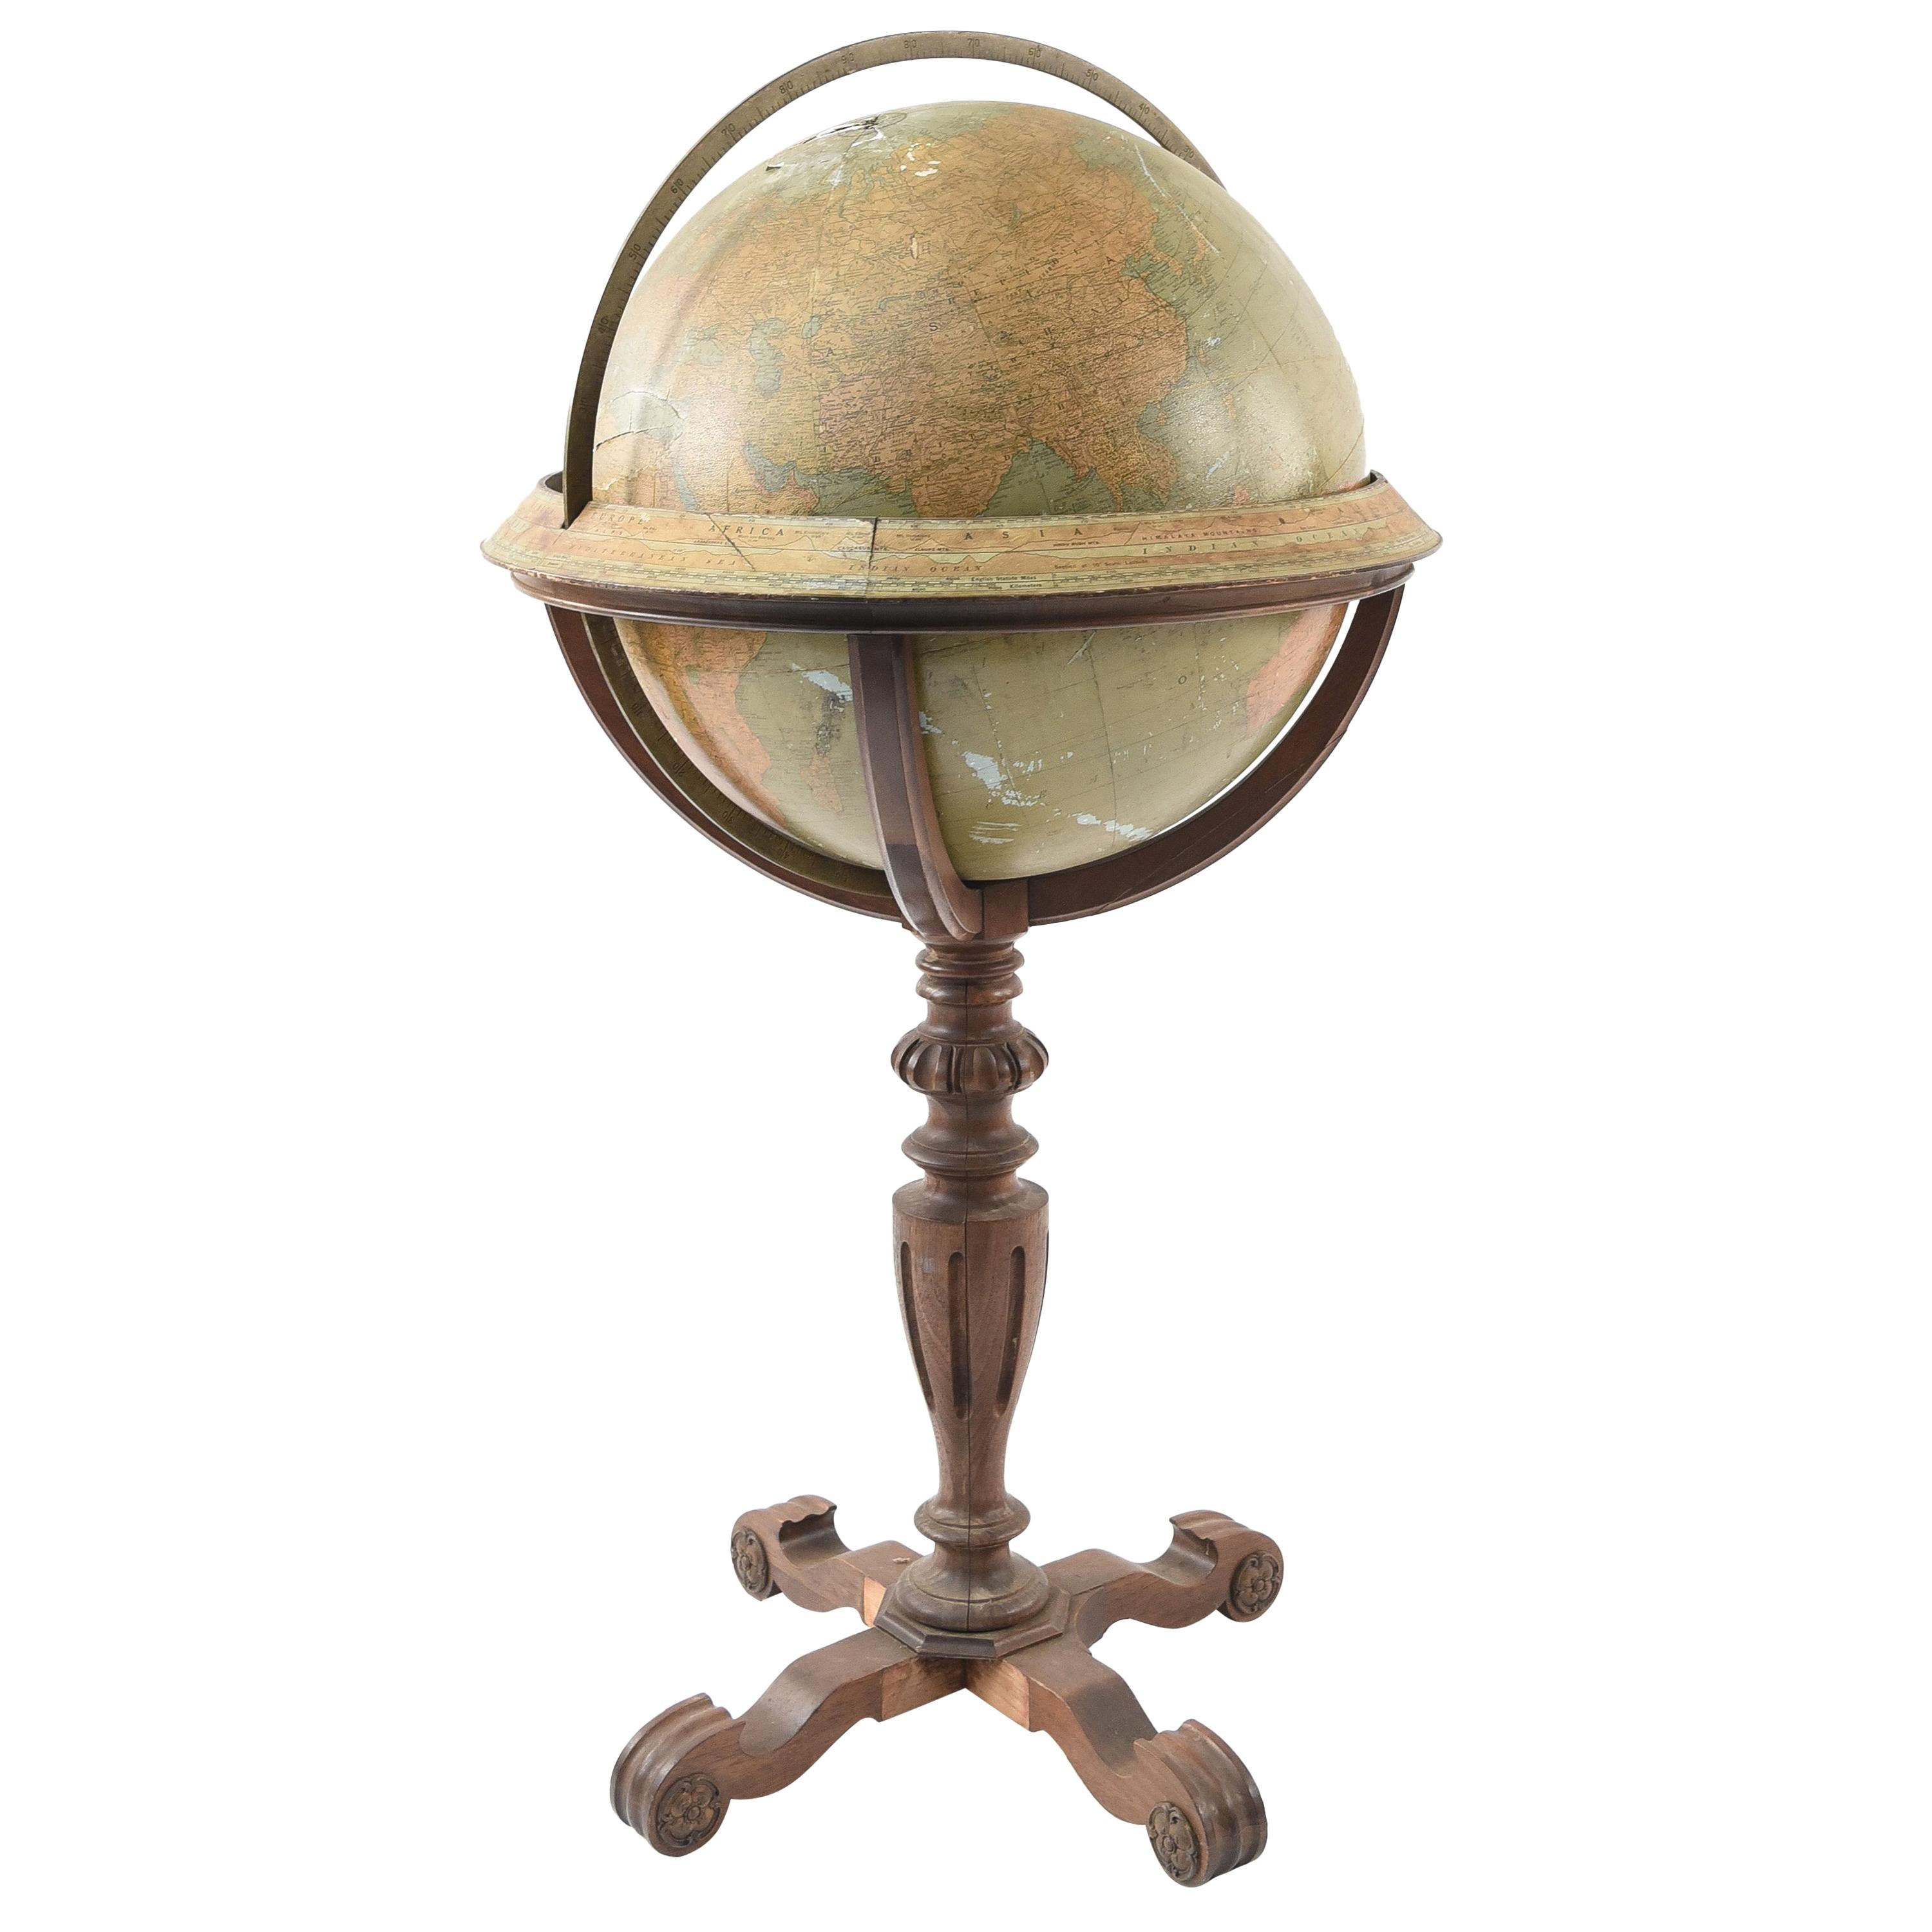 Rand McNally & Co. Terrestrial Globe on Stand, circa 1920